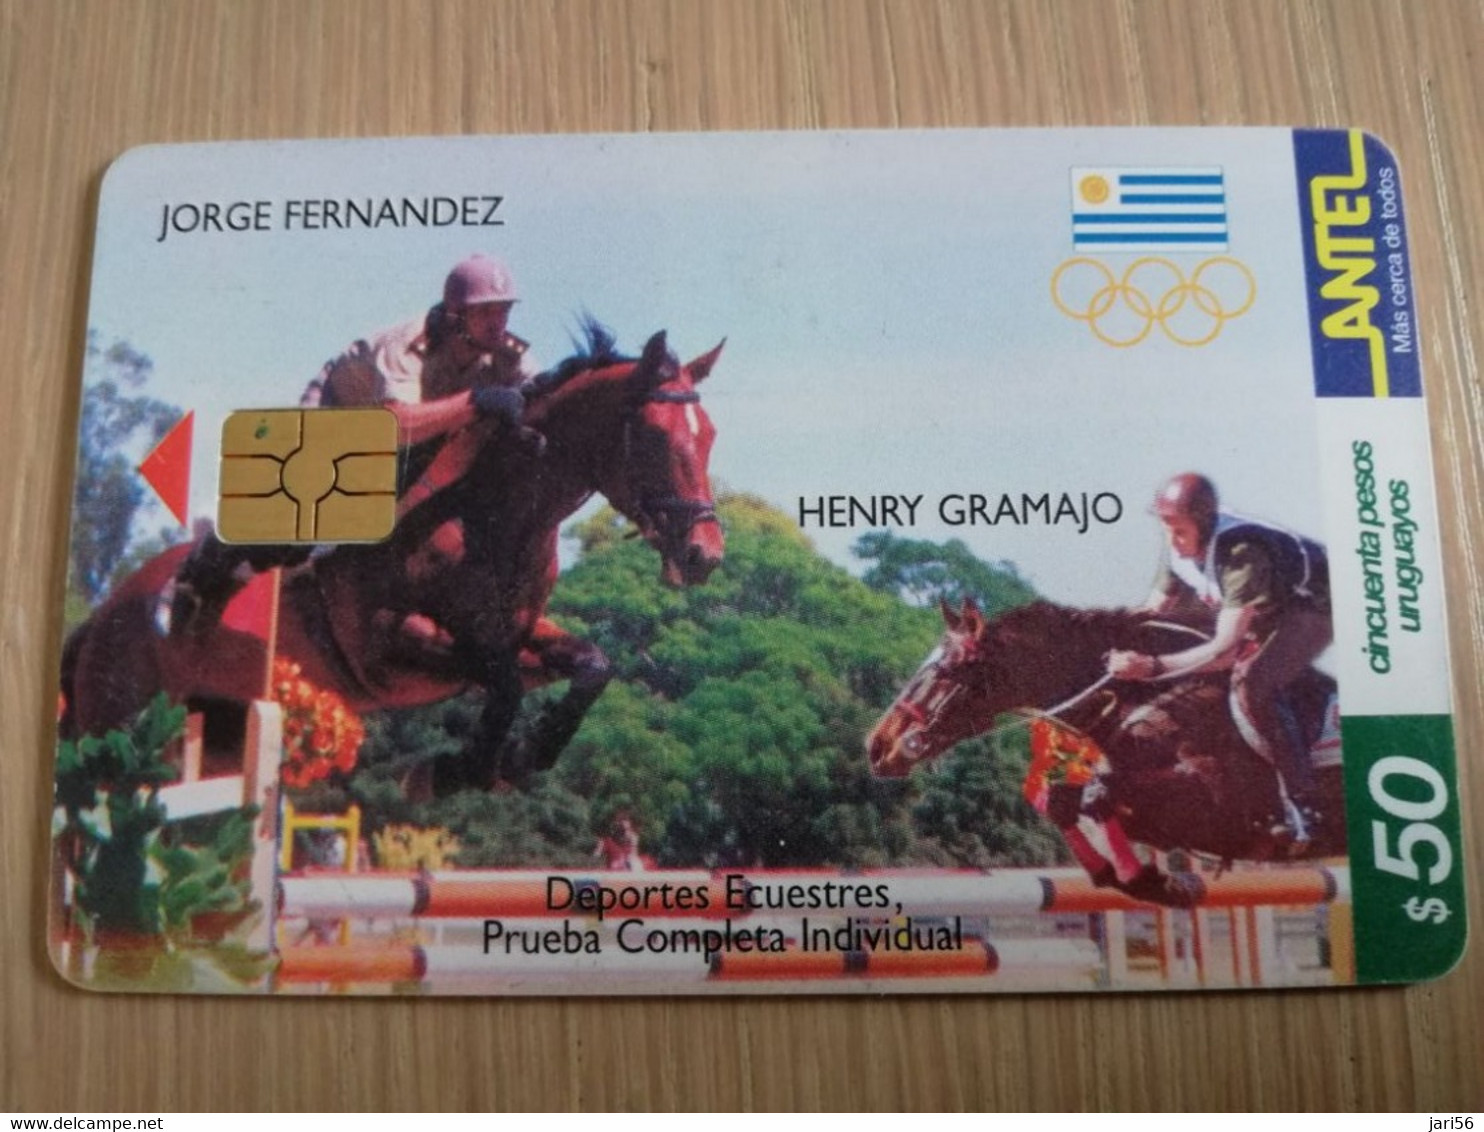 URUGUAY CHIPCARD  SPORTS    $50  JORGE FERNANDEZ  DEPORTES ECUESTRES HORSE JUMPING            Nice Used Card    **4547** - Uruguay